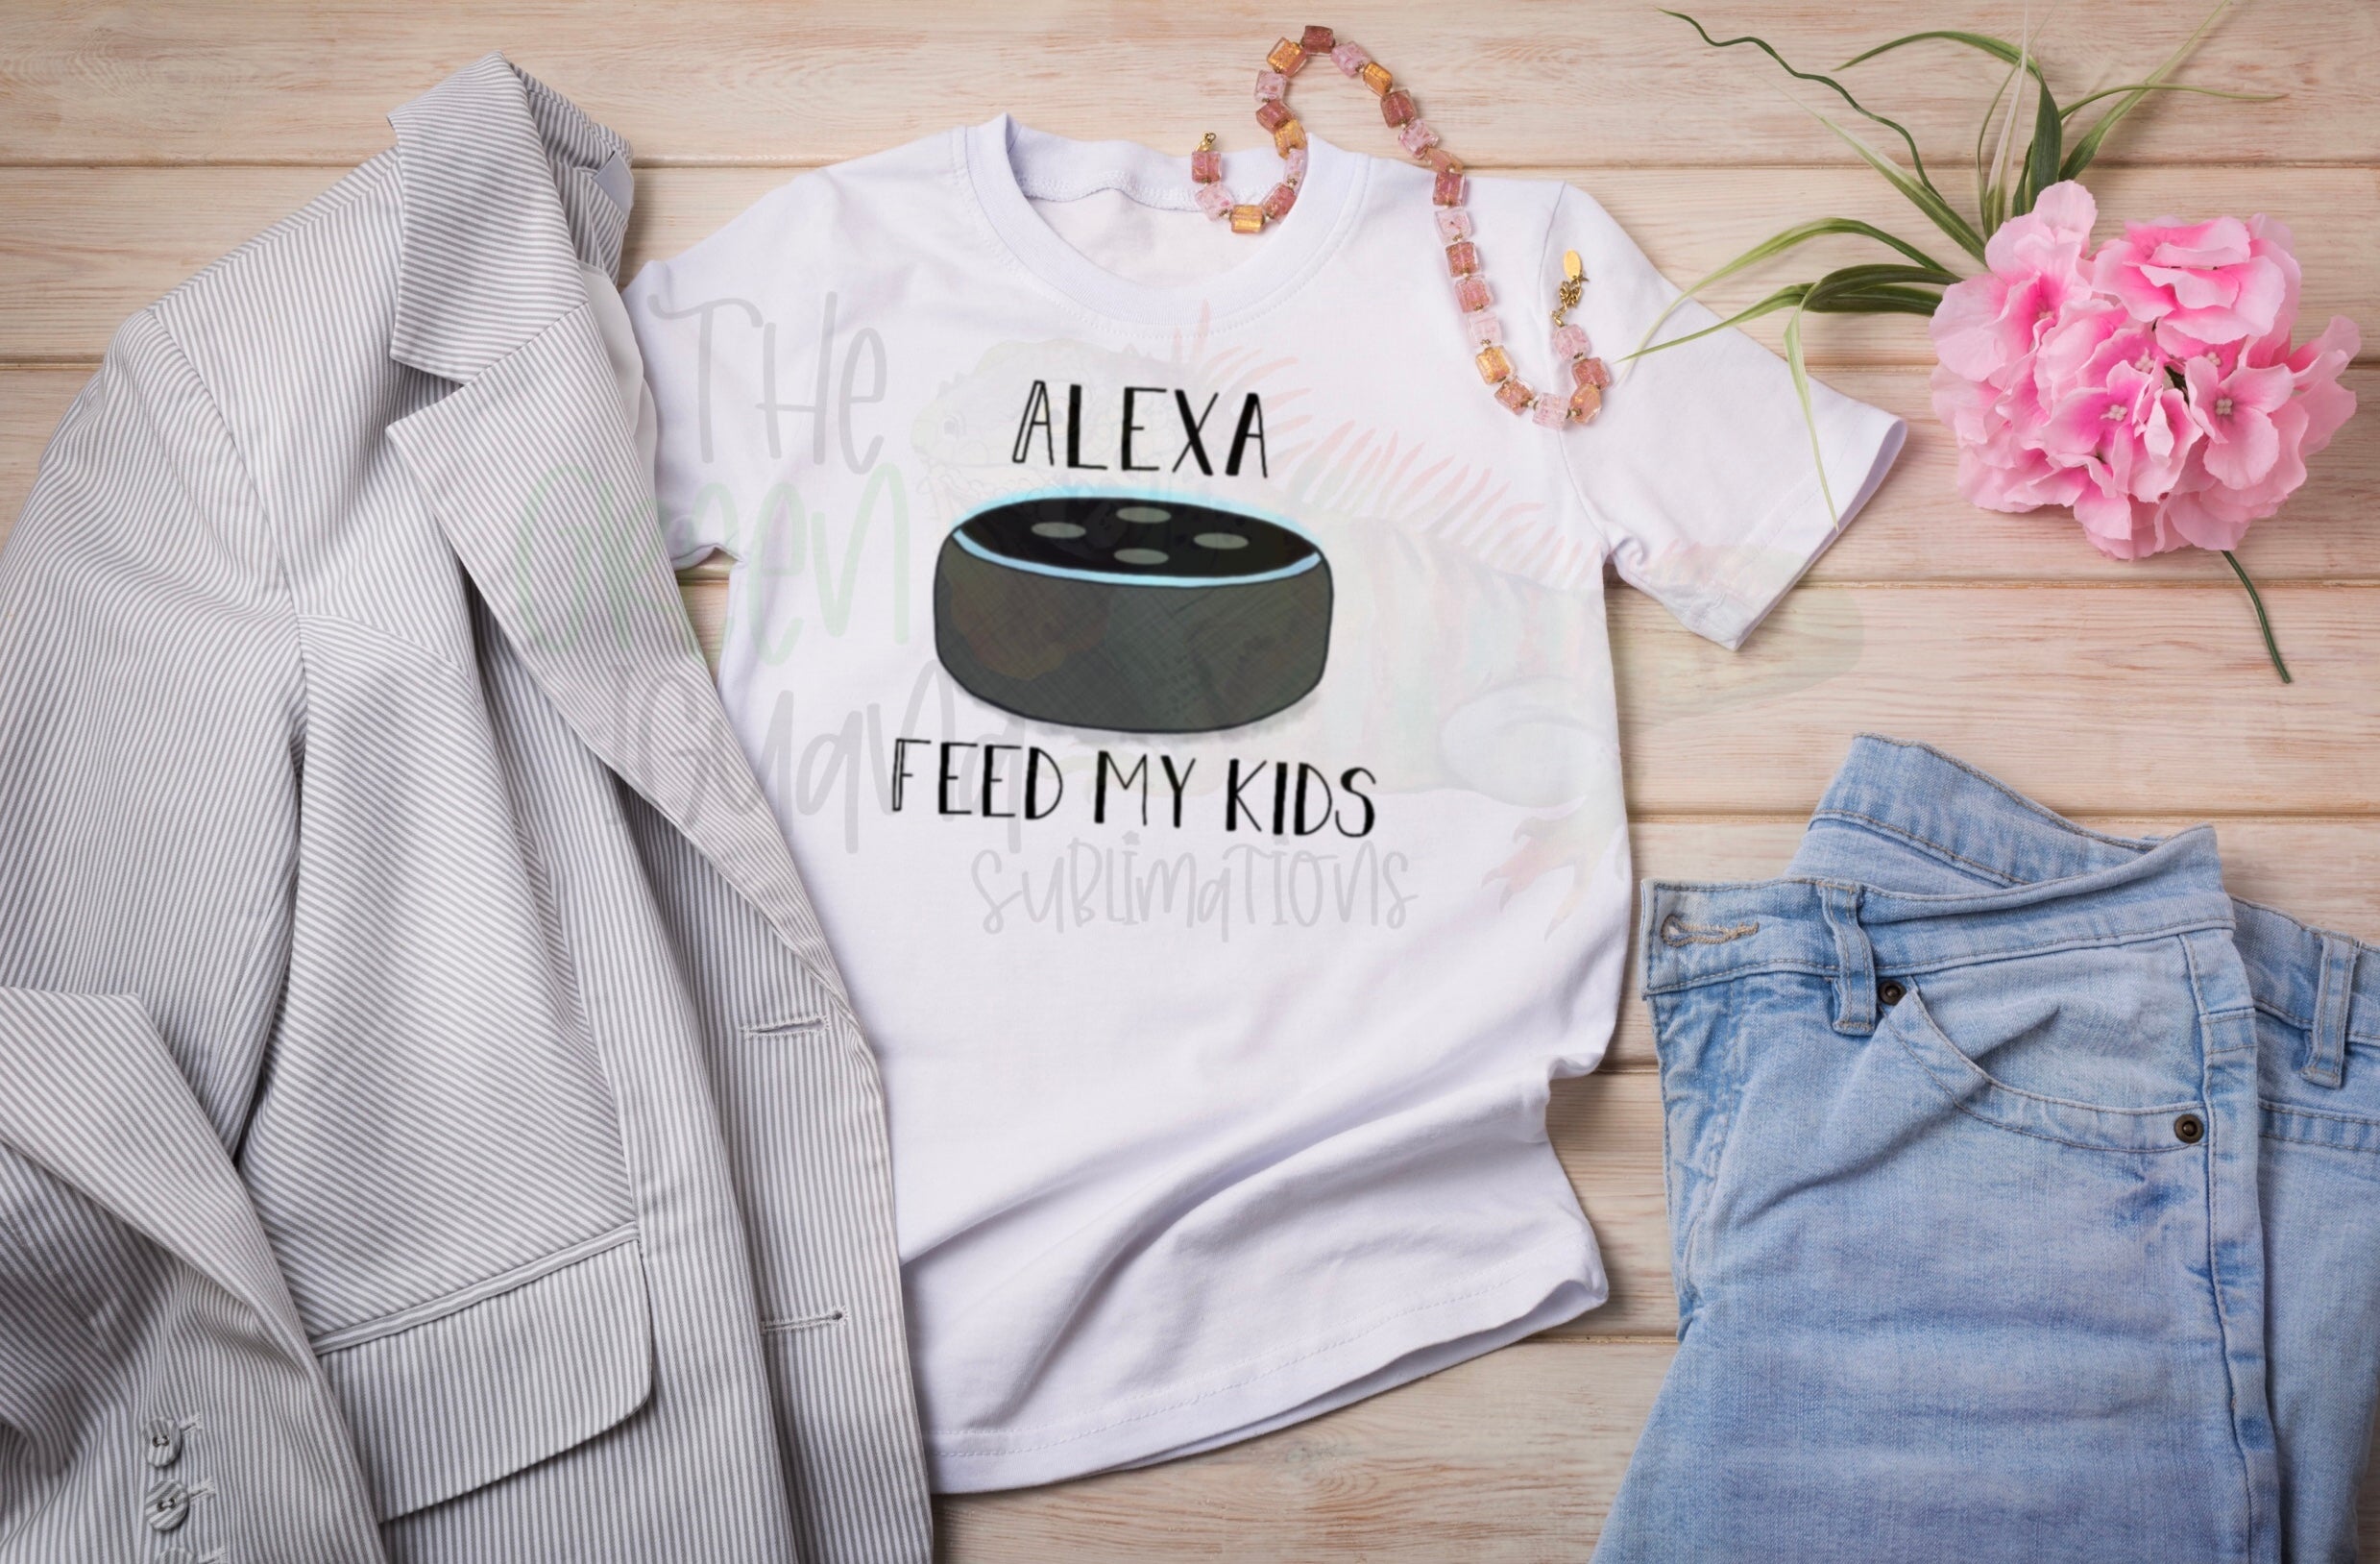 Alexa feed my kids - DIGITAL